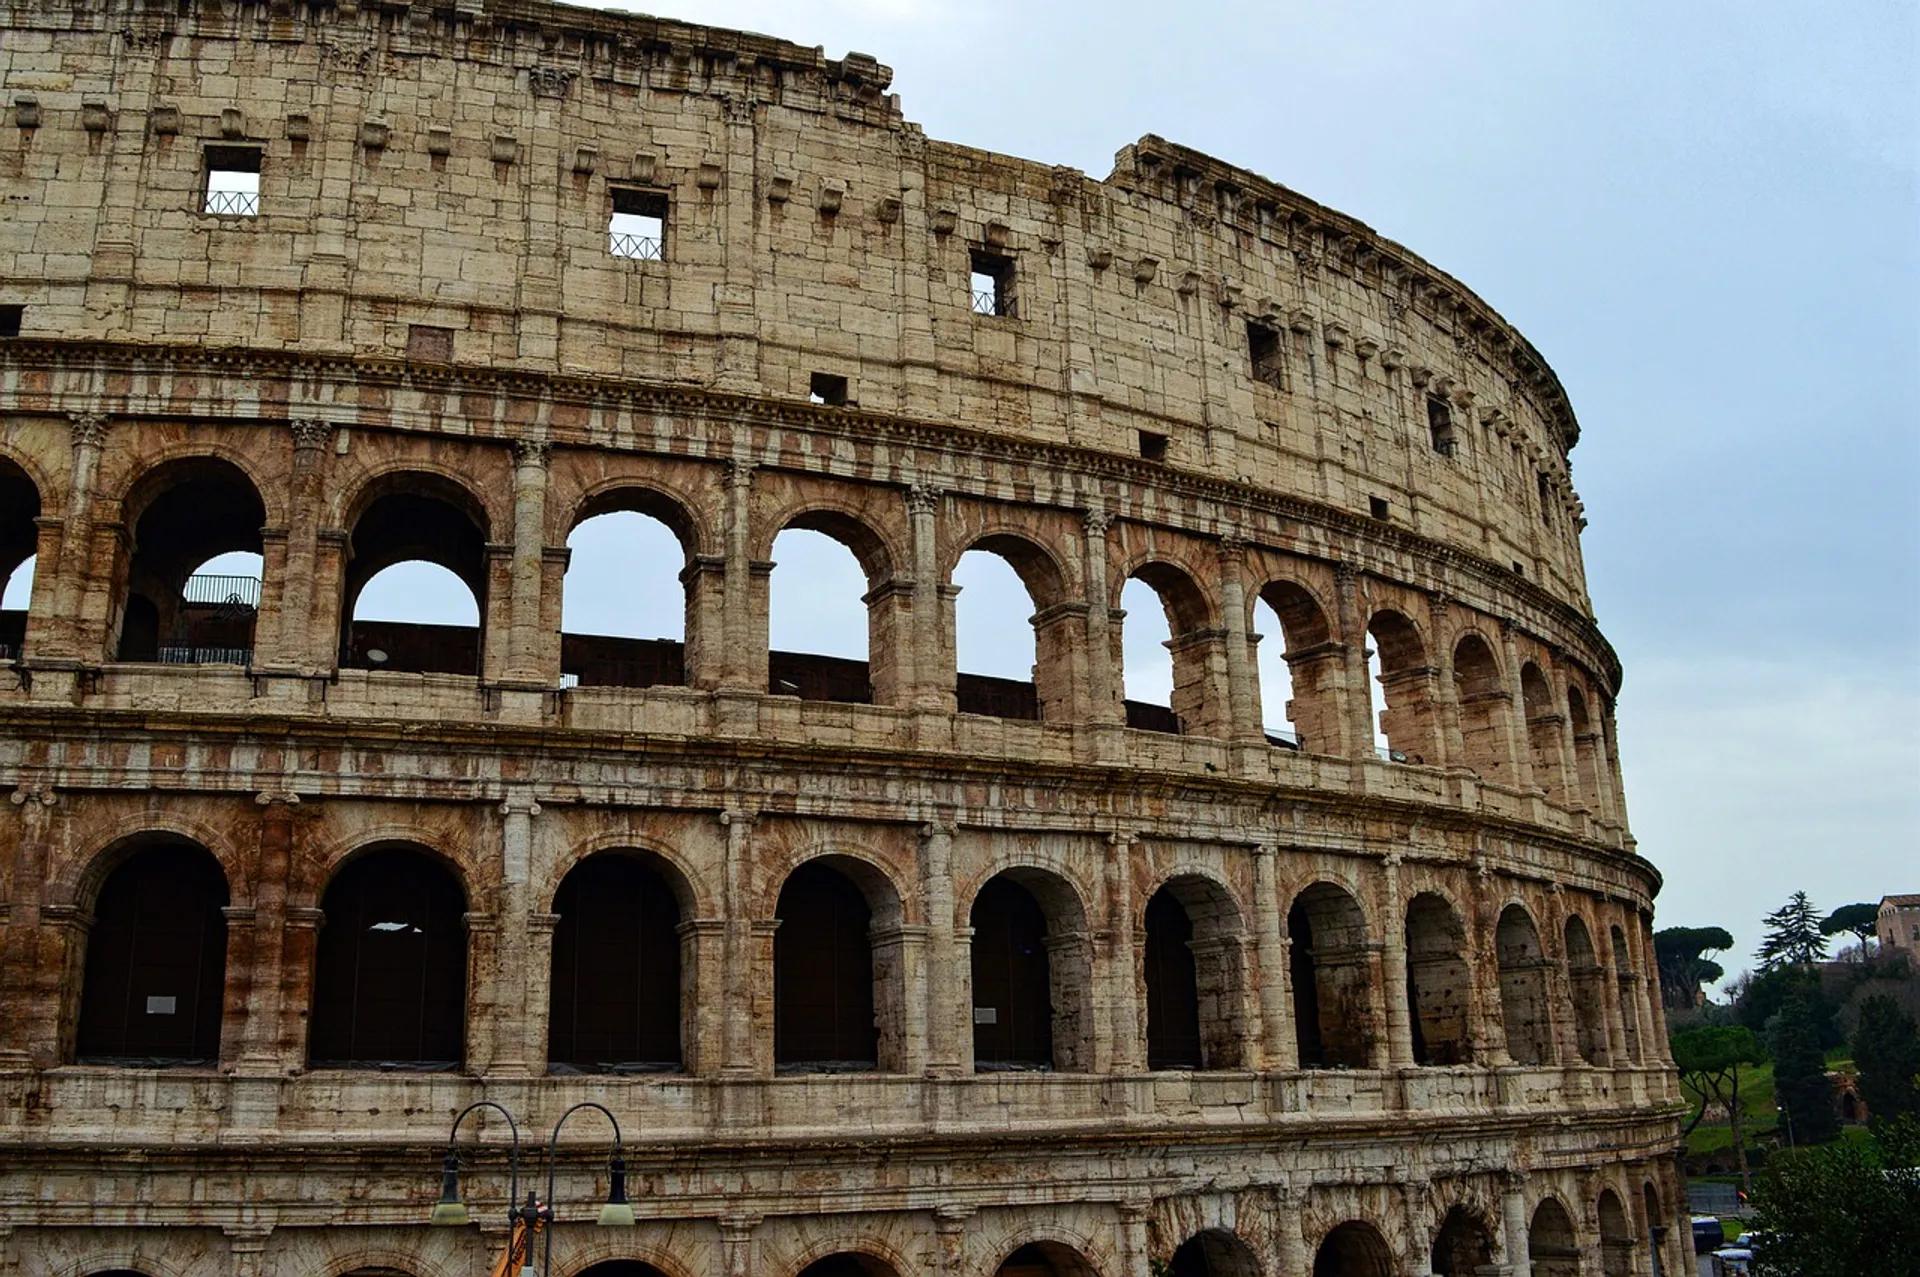 Visit the Roman Colosseum